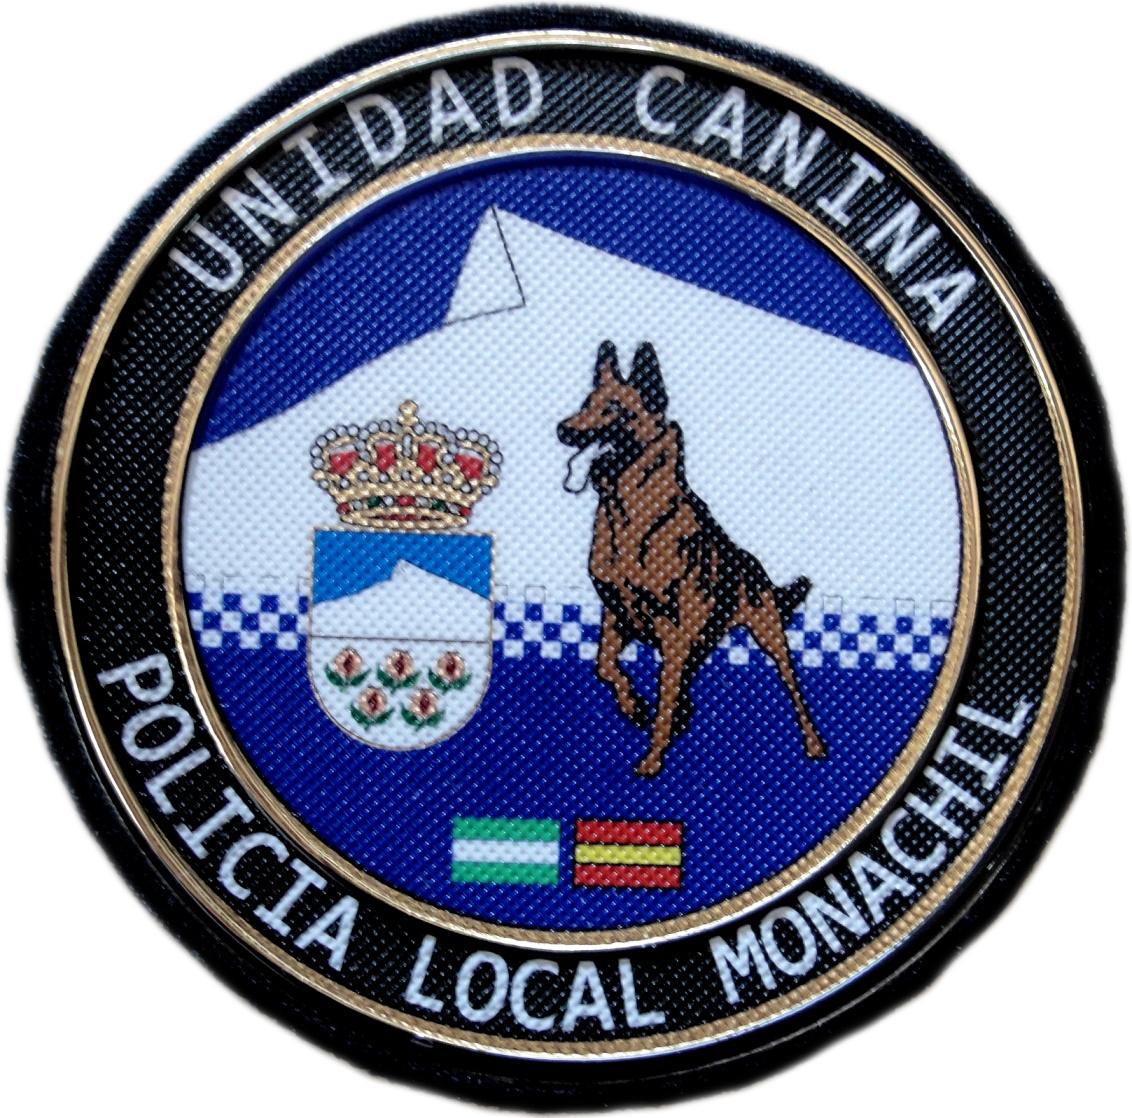 Policía Local Monachil Granada unidad canina k-9 parche insignia emblema distintivo